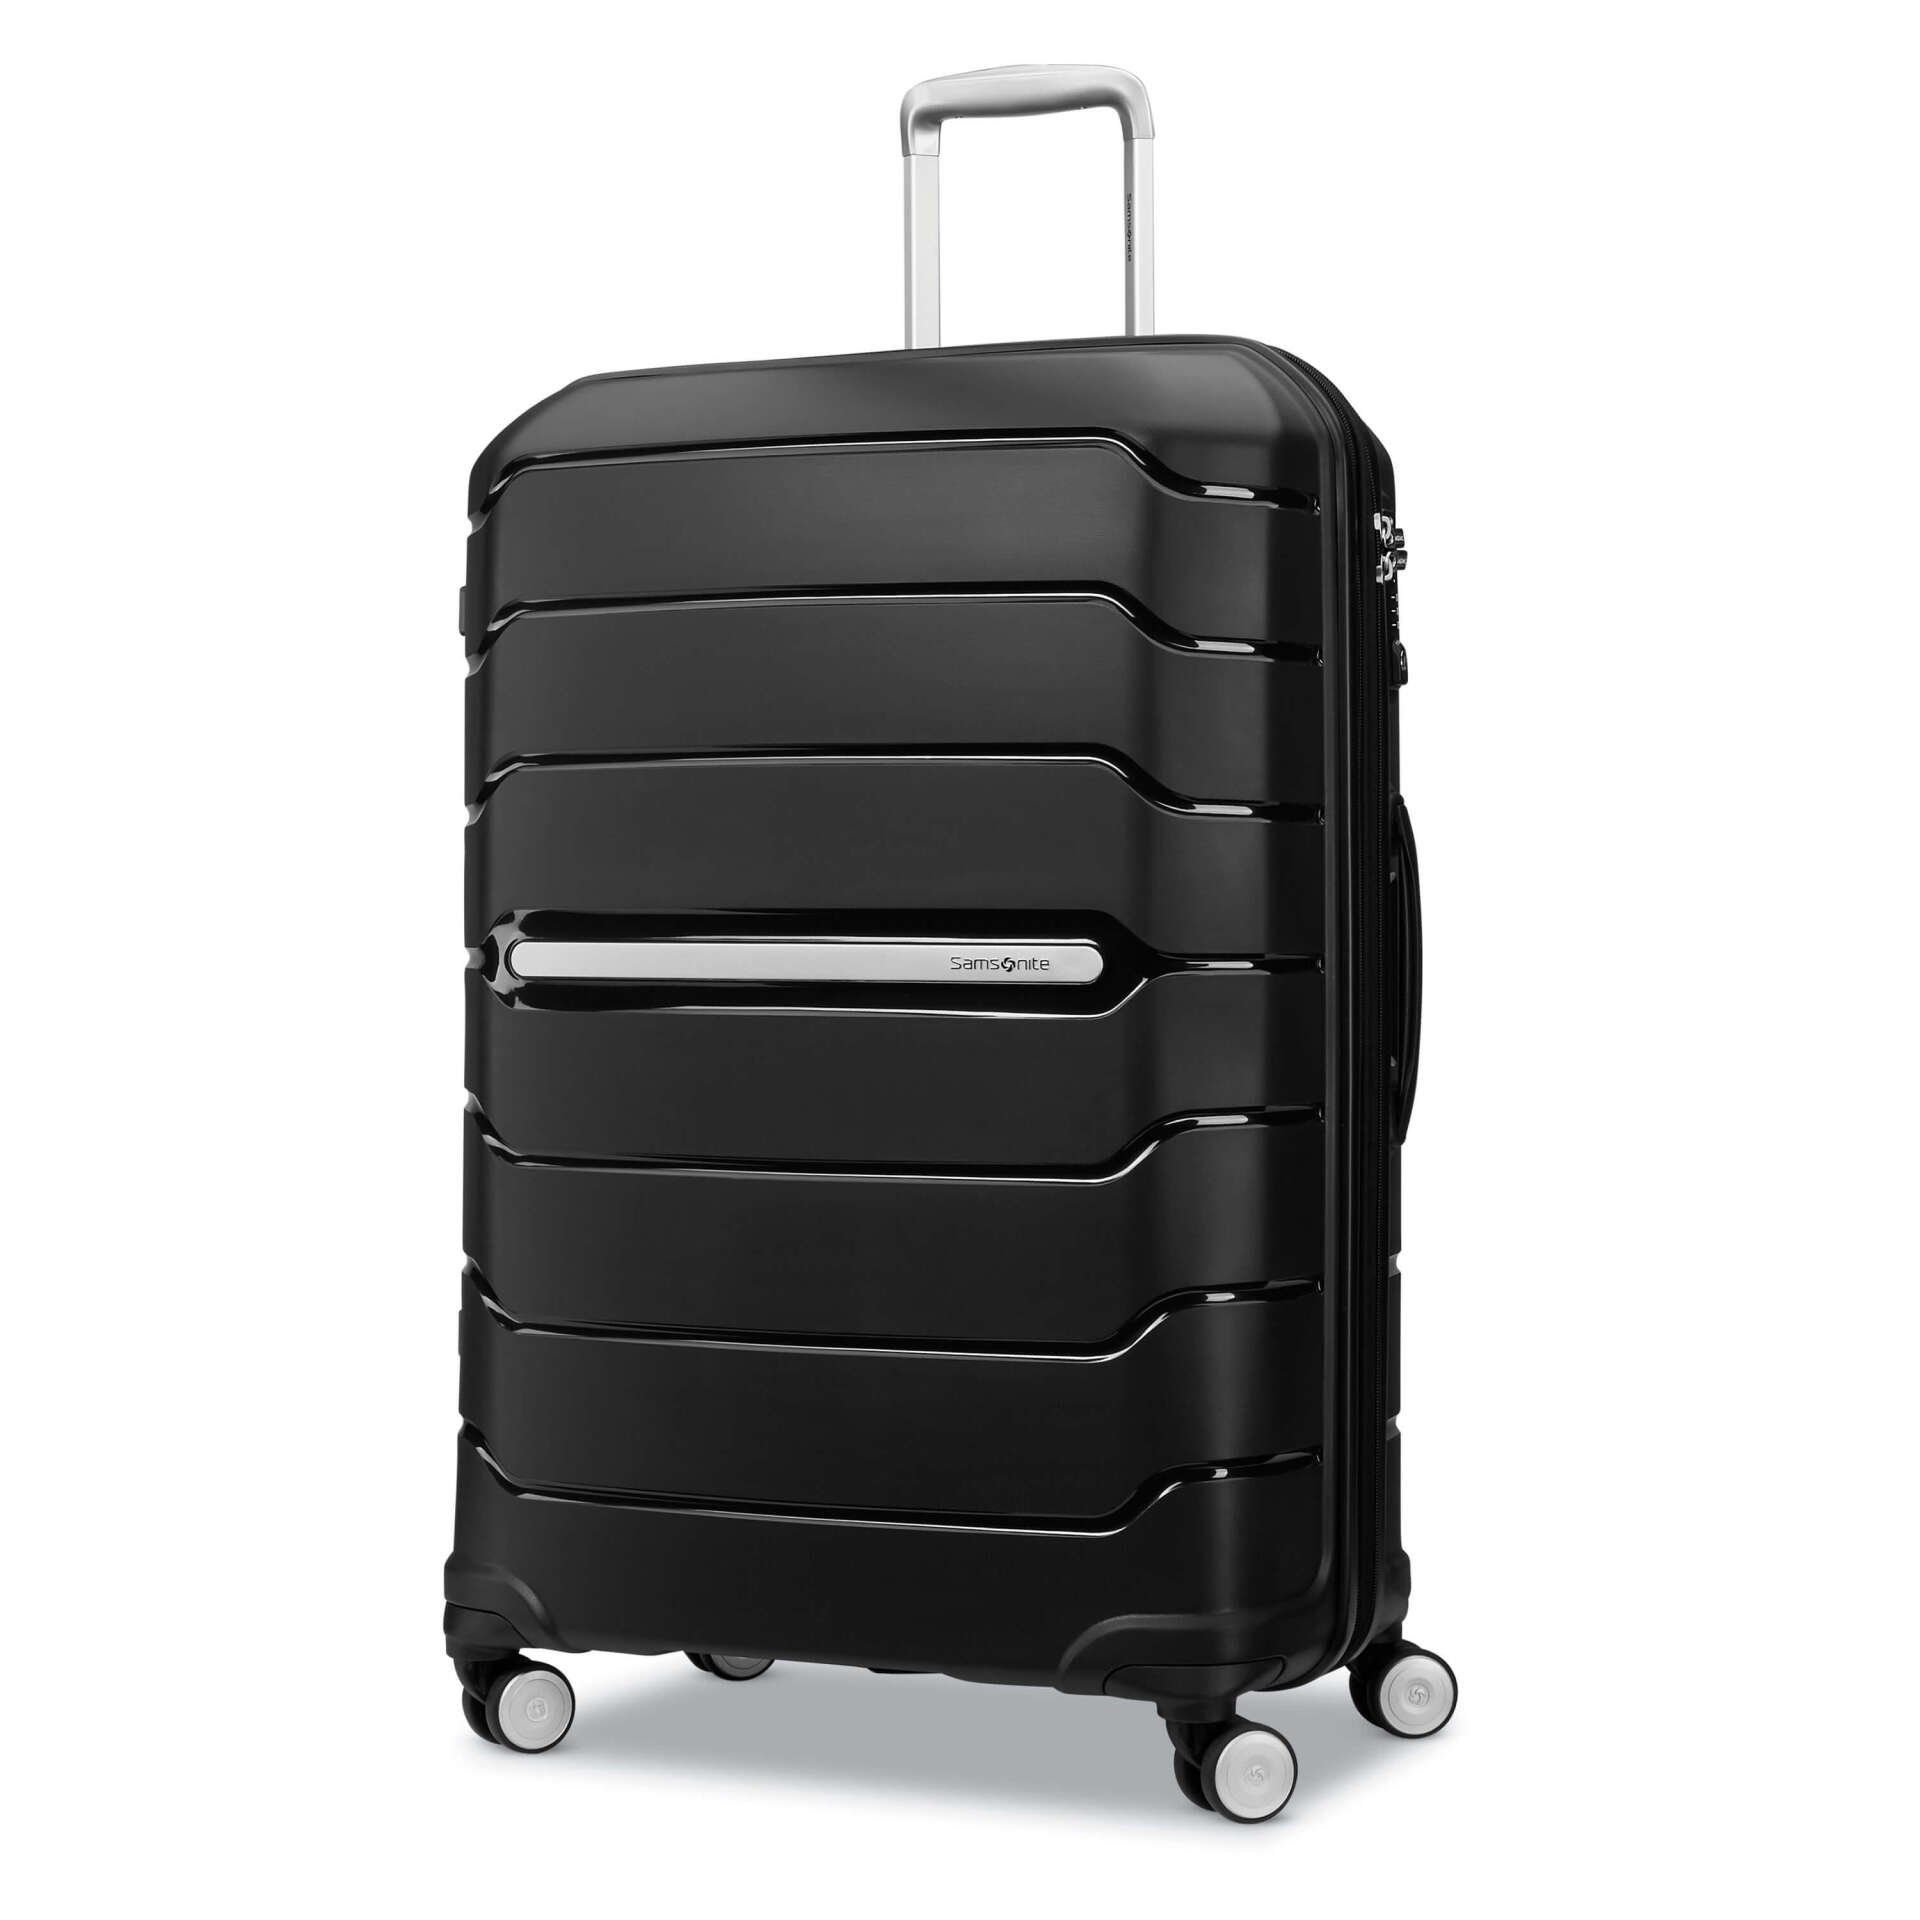 samsonite freeform hard case suitcase black suitcase silver hardware samsonite logo